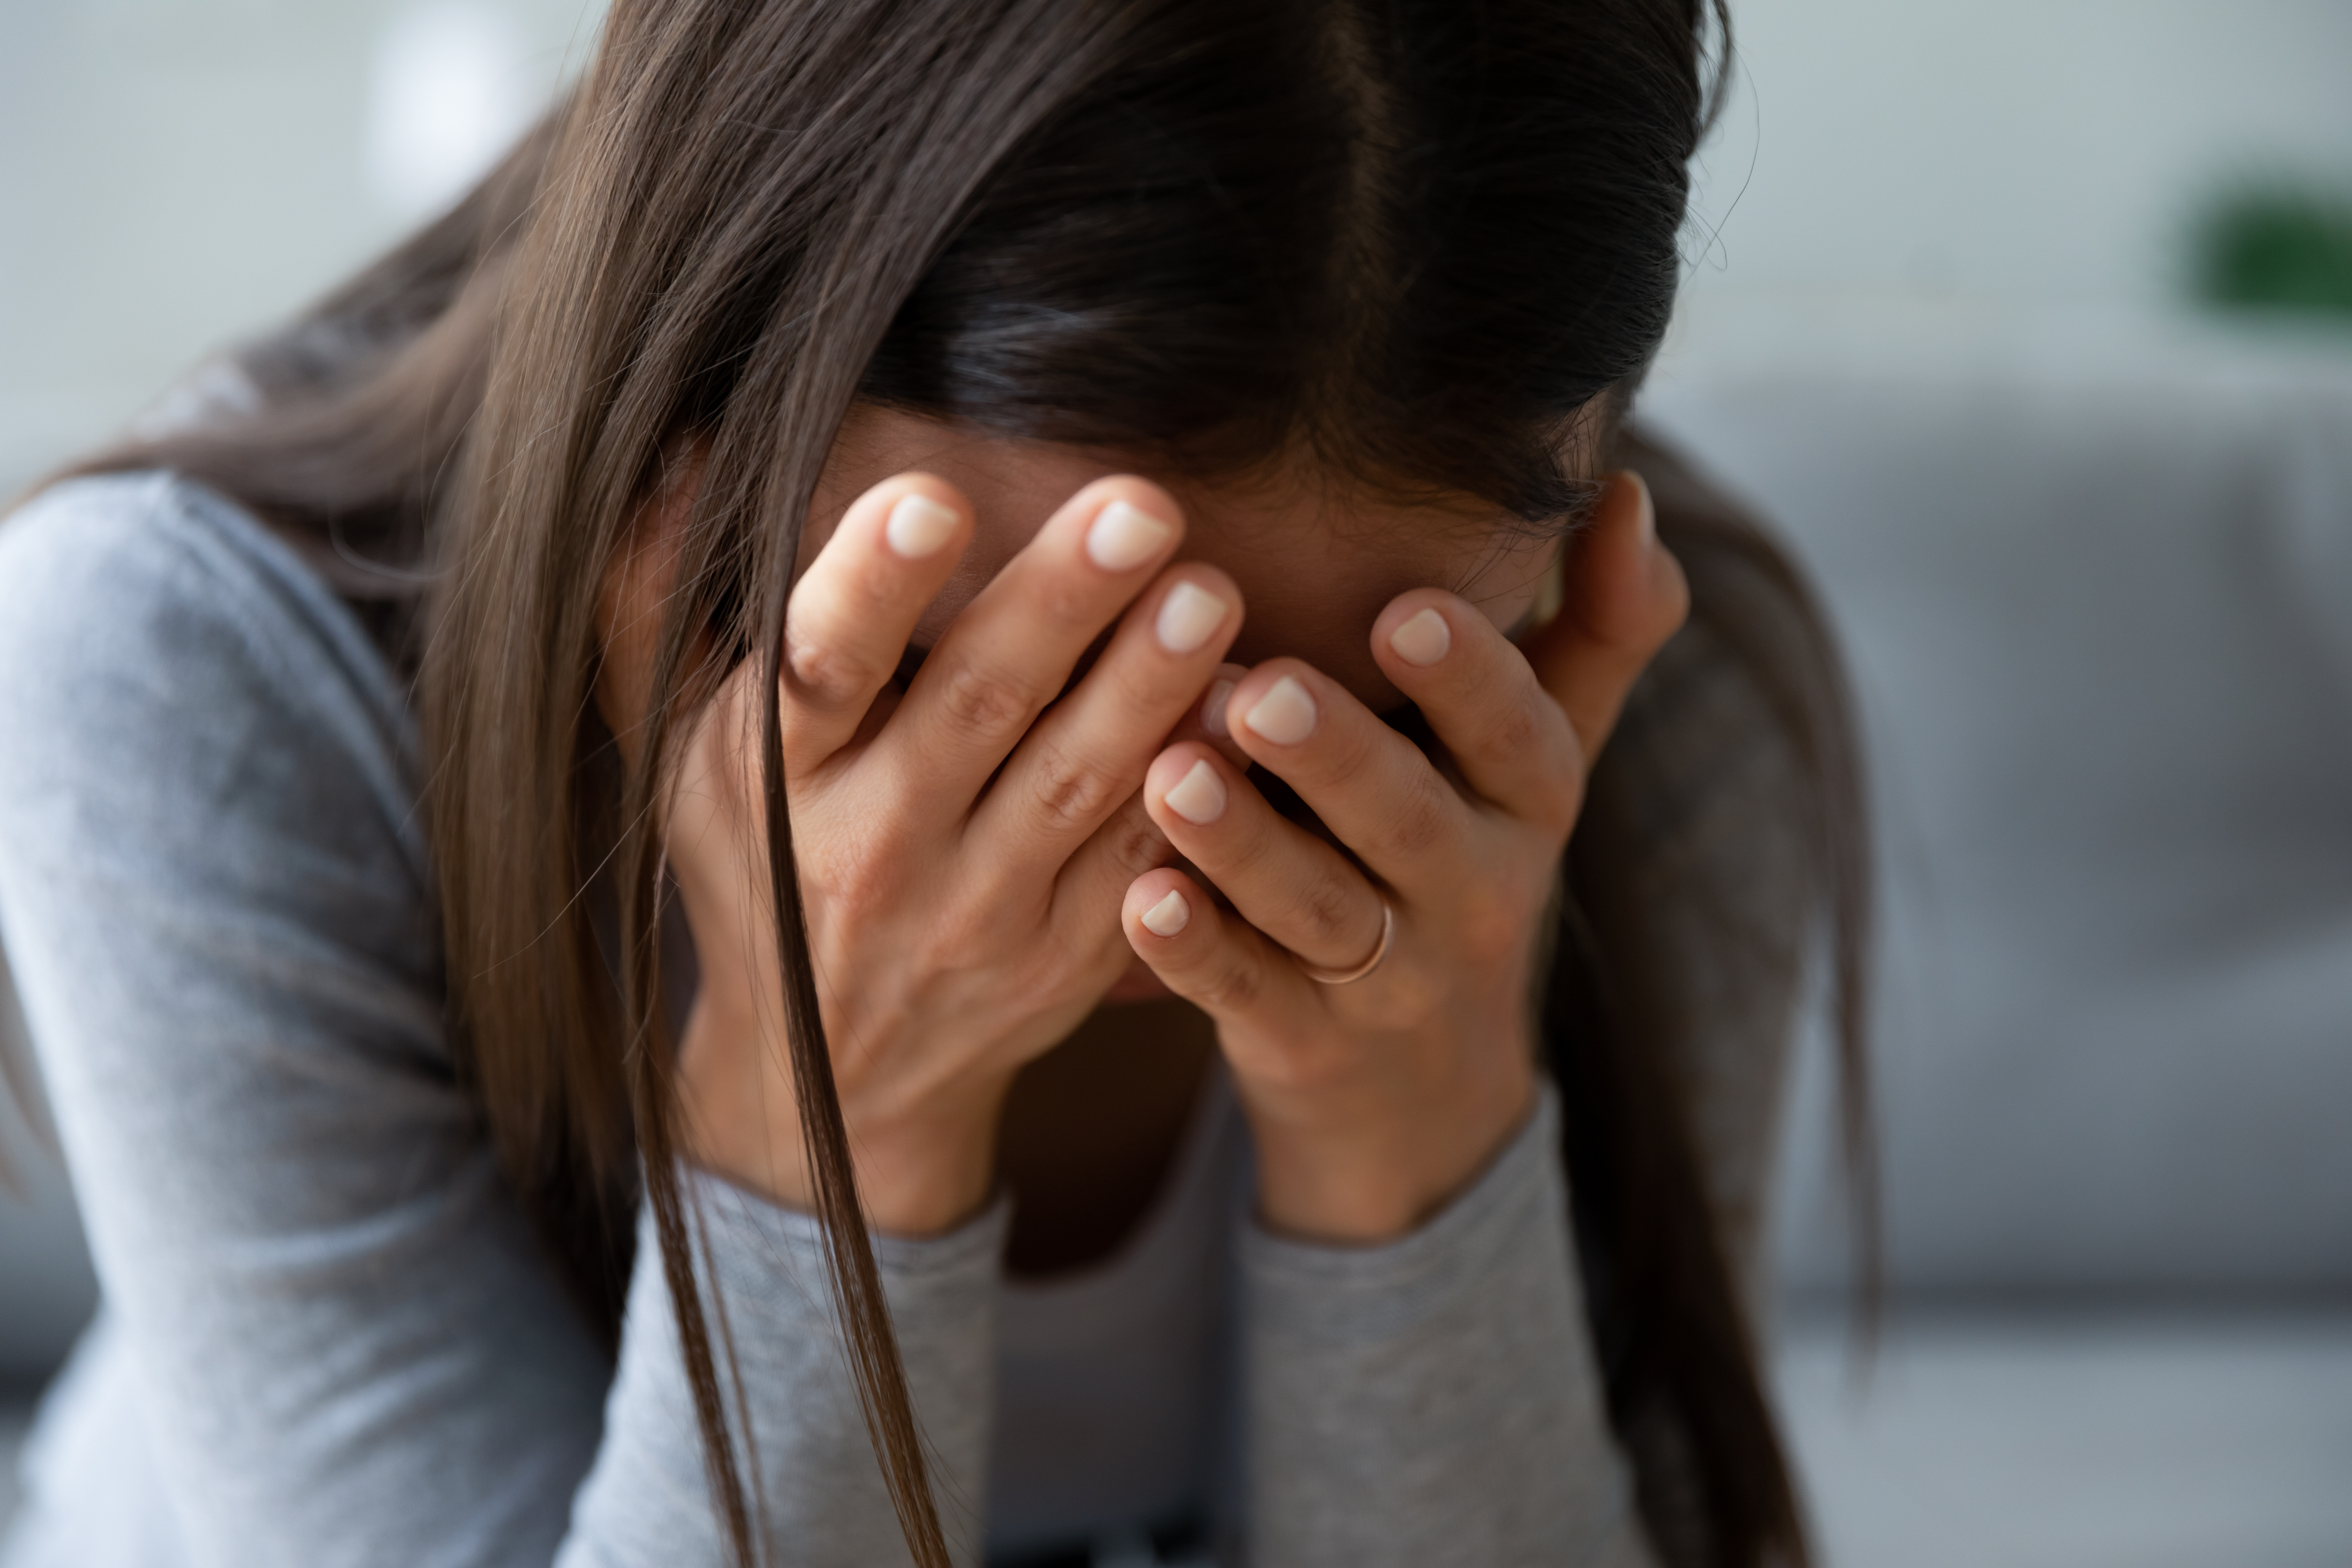 Junge Frau weint | Quelle: Shutterstock